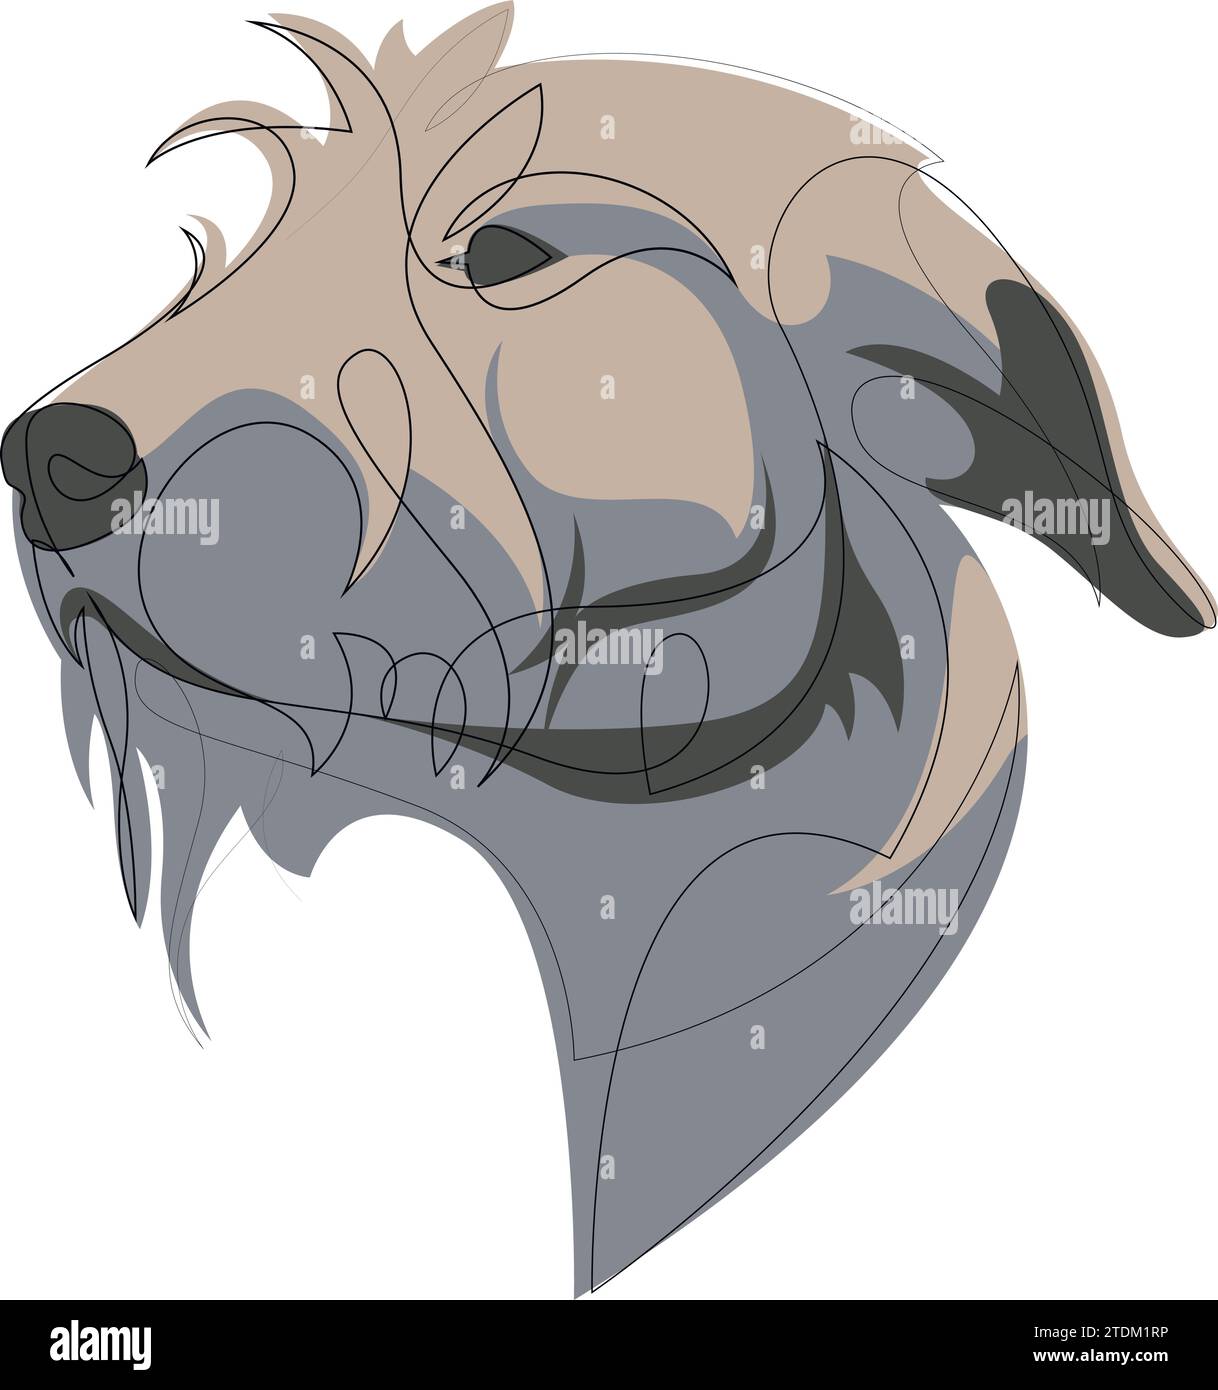 Continuous line Irish Wolfhound. Single line minimal style Scottish Deerhound dog vector illustration. Portrait drawing Stock Vector